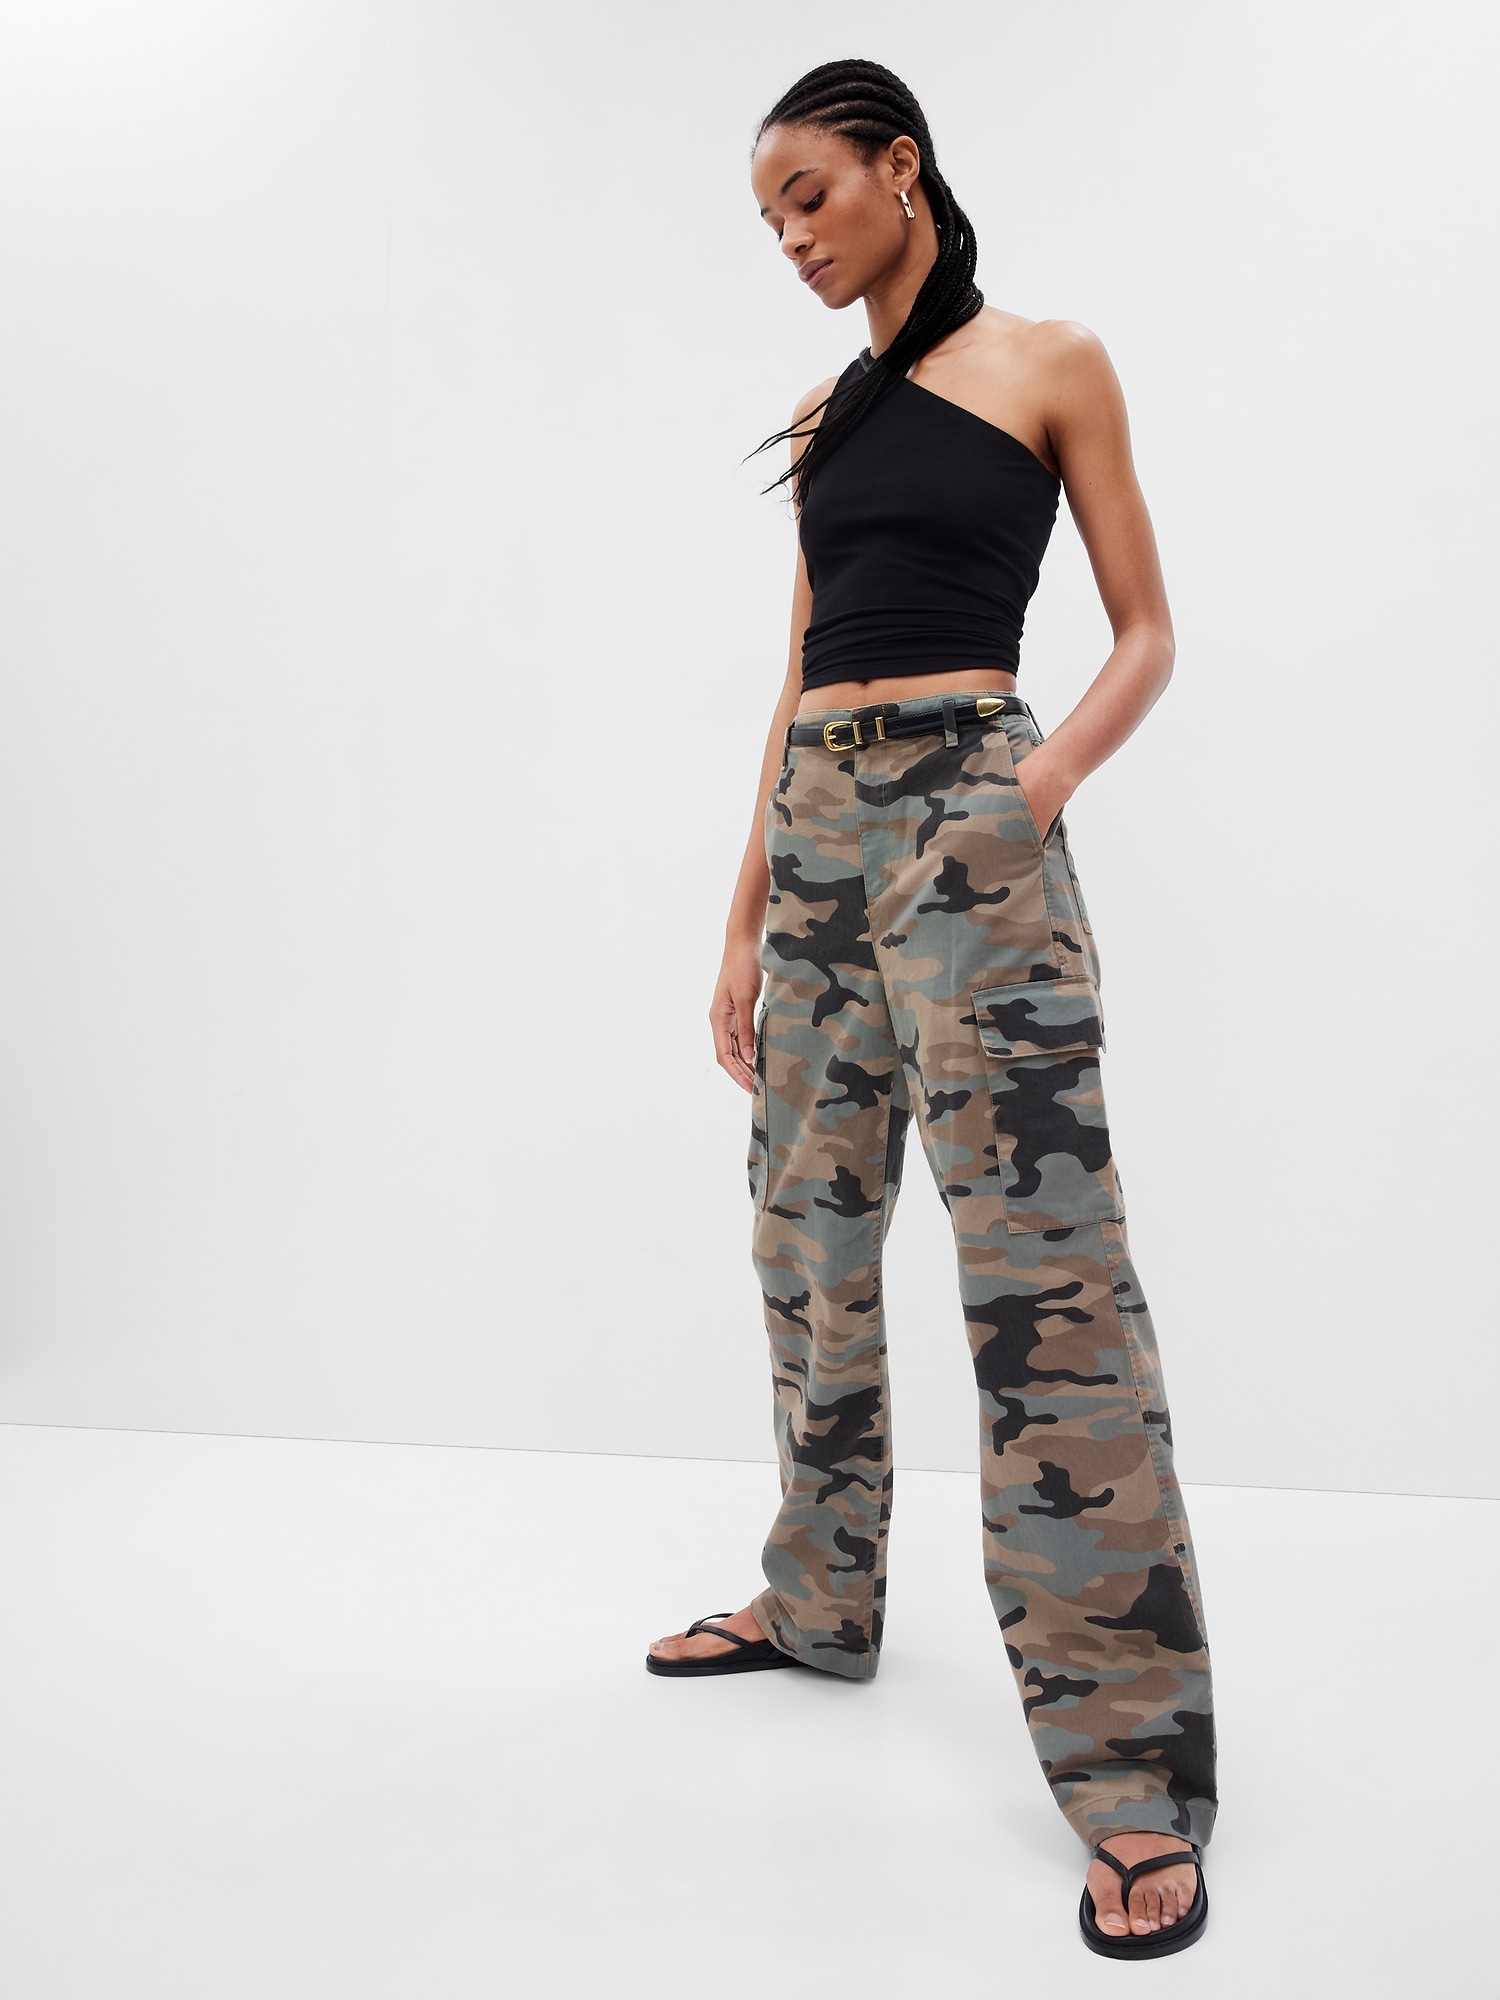 Gap Women's Size 8 Green Military Camo Mid Rise Girlfriend Chino Pants